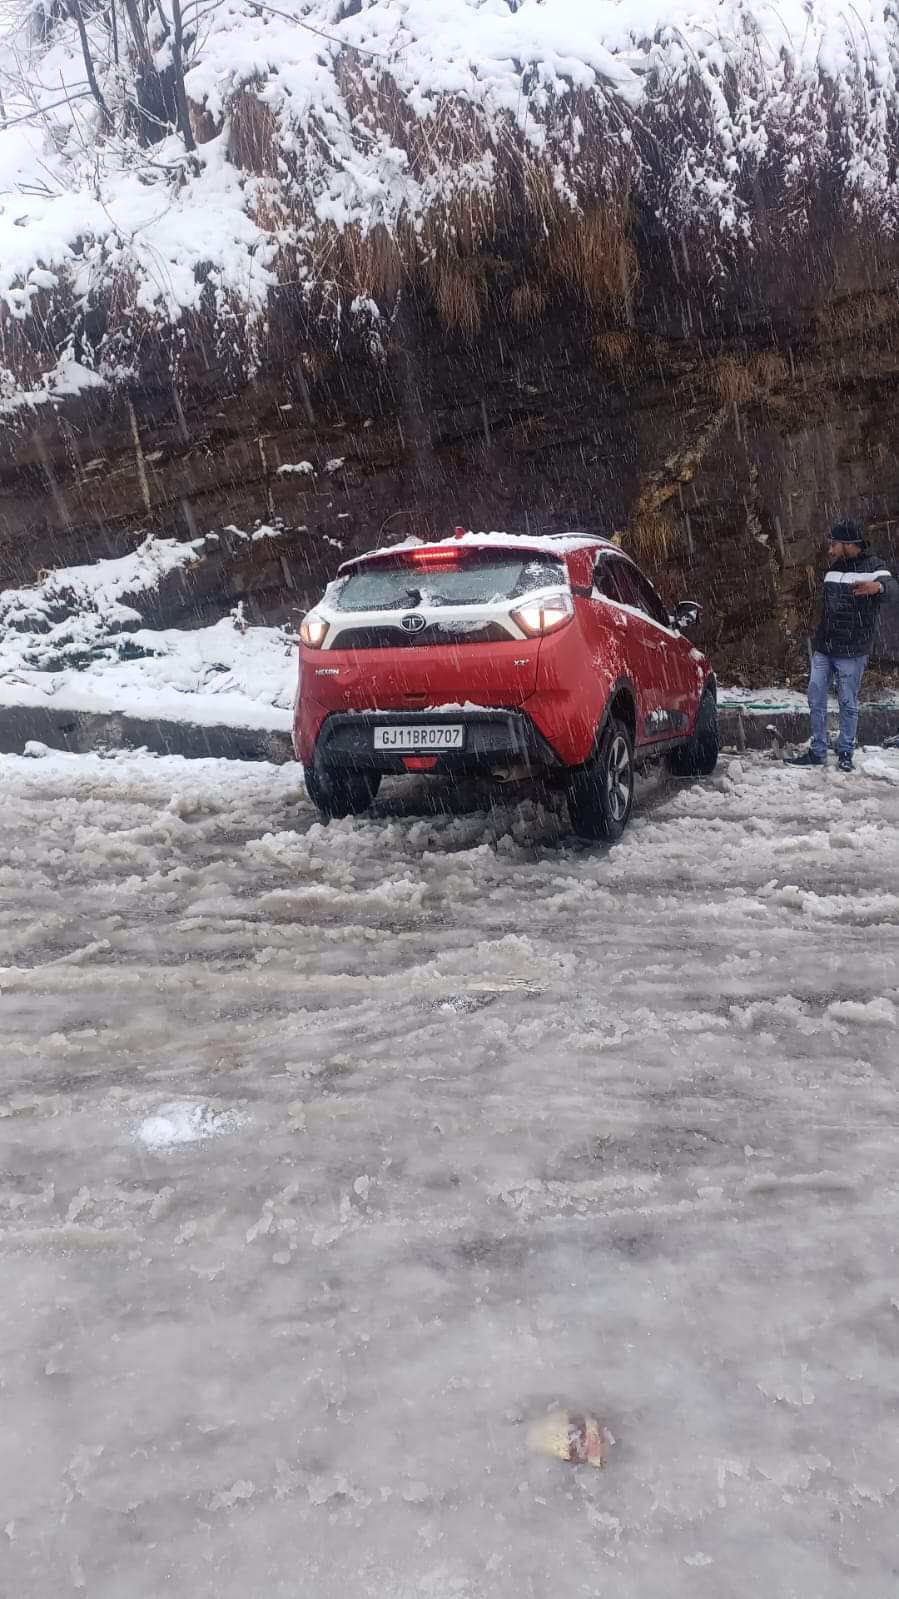 Heavy Snowfall In Lahaul Spiti